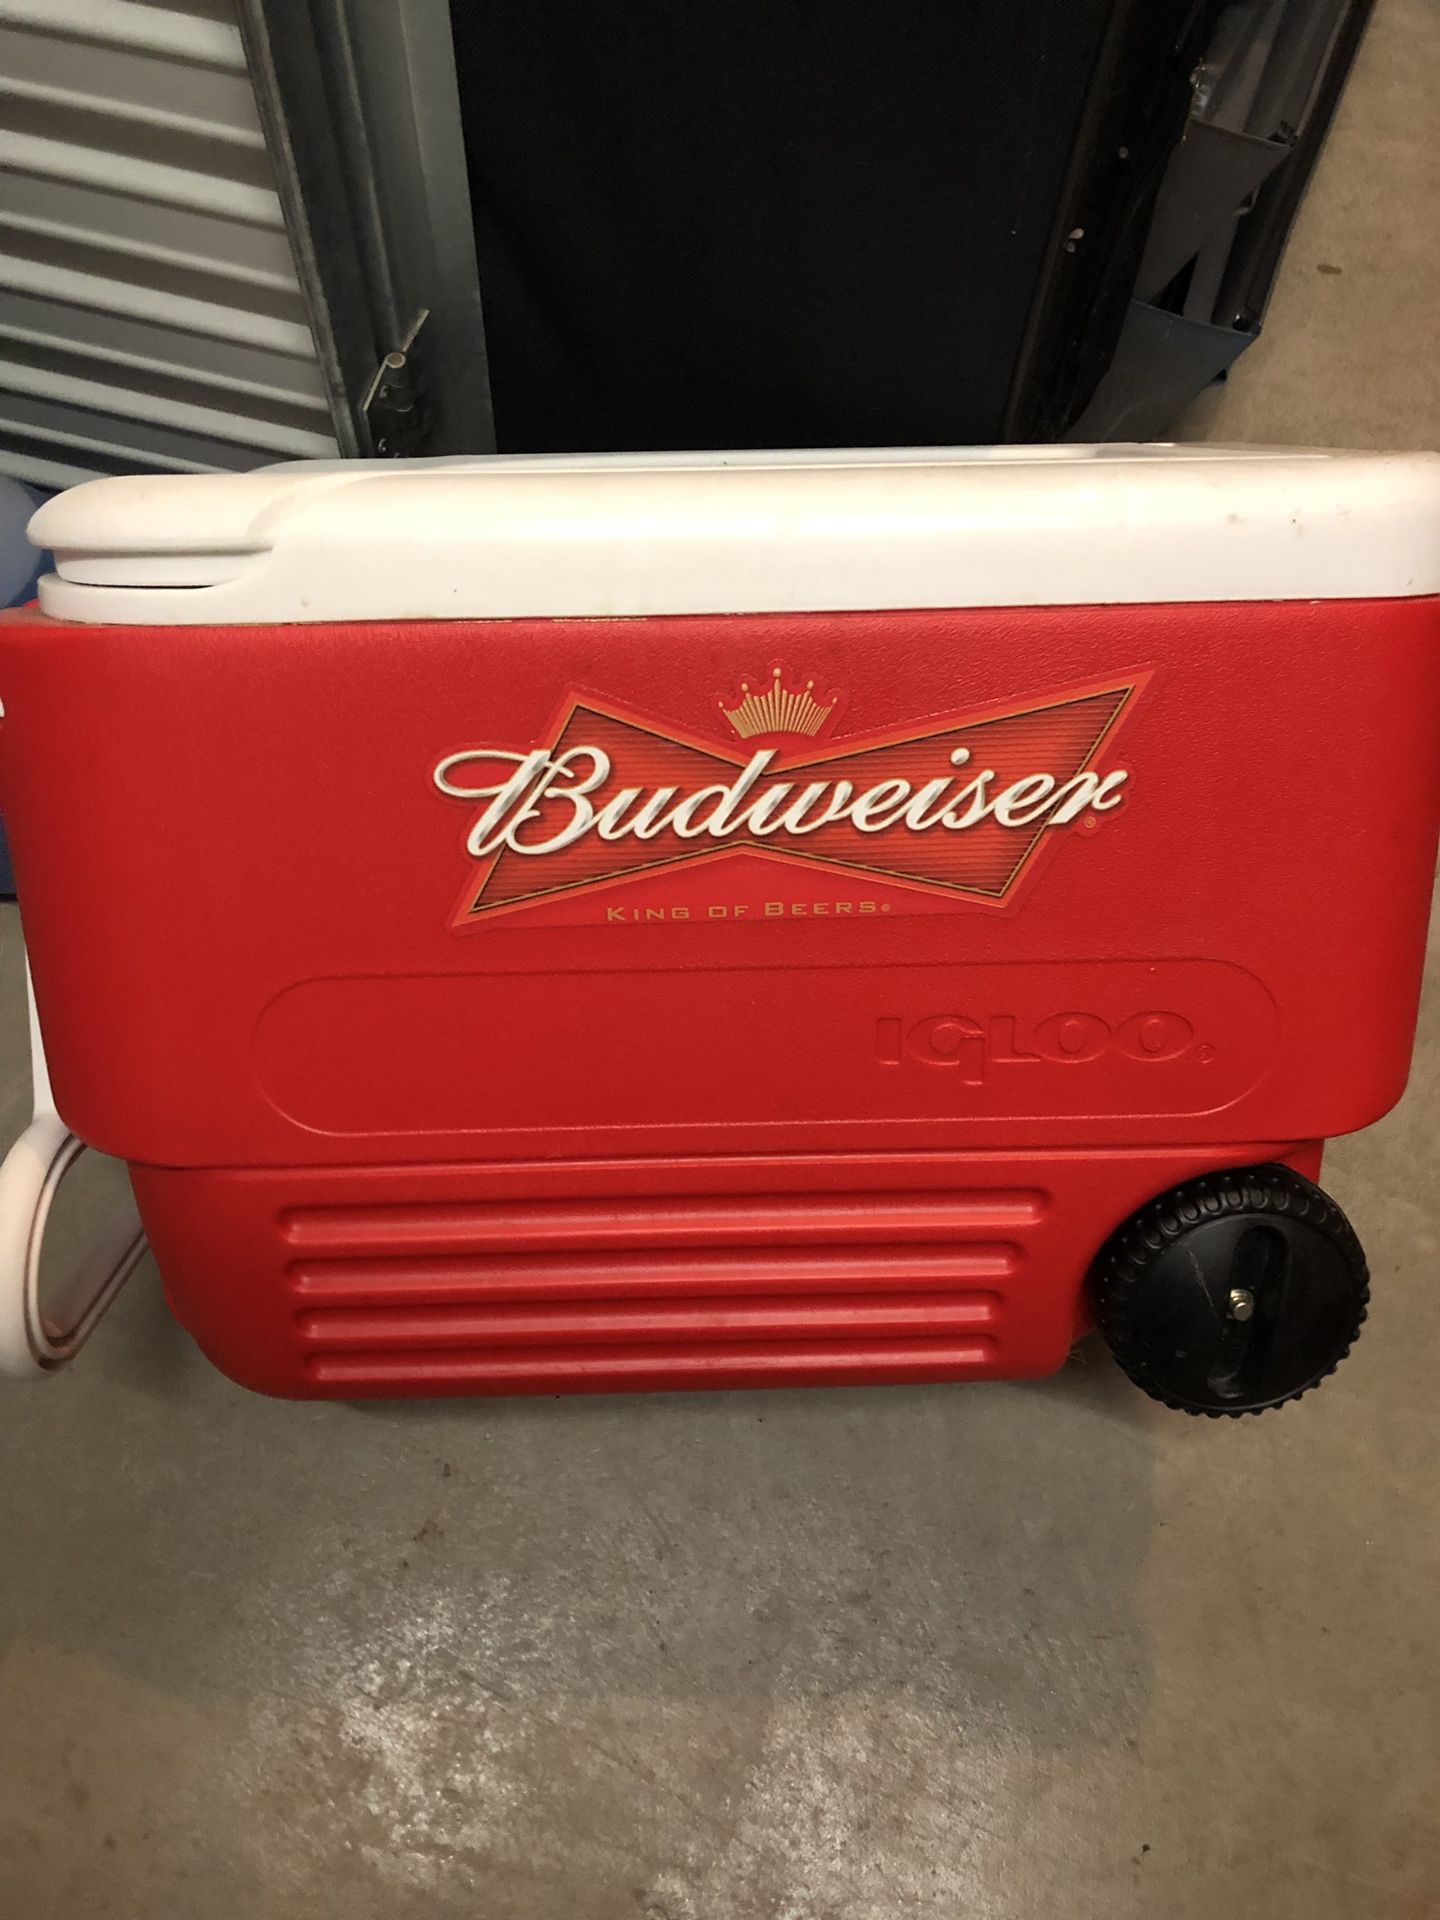 Budweiser igloo cooler